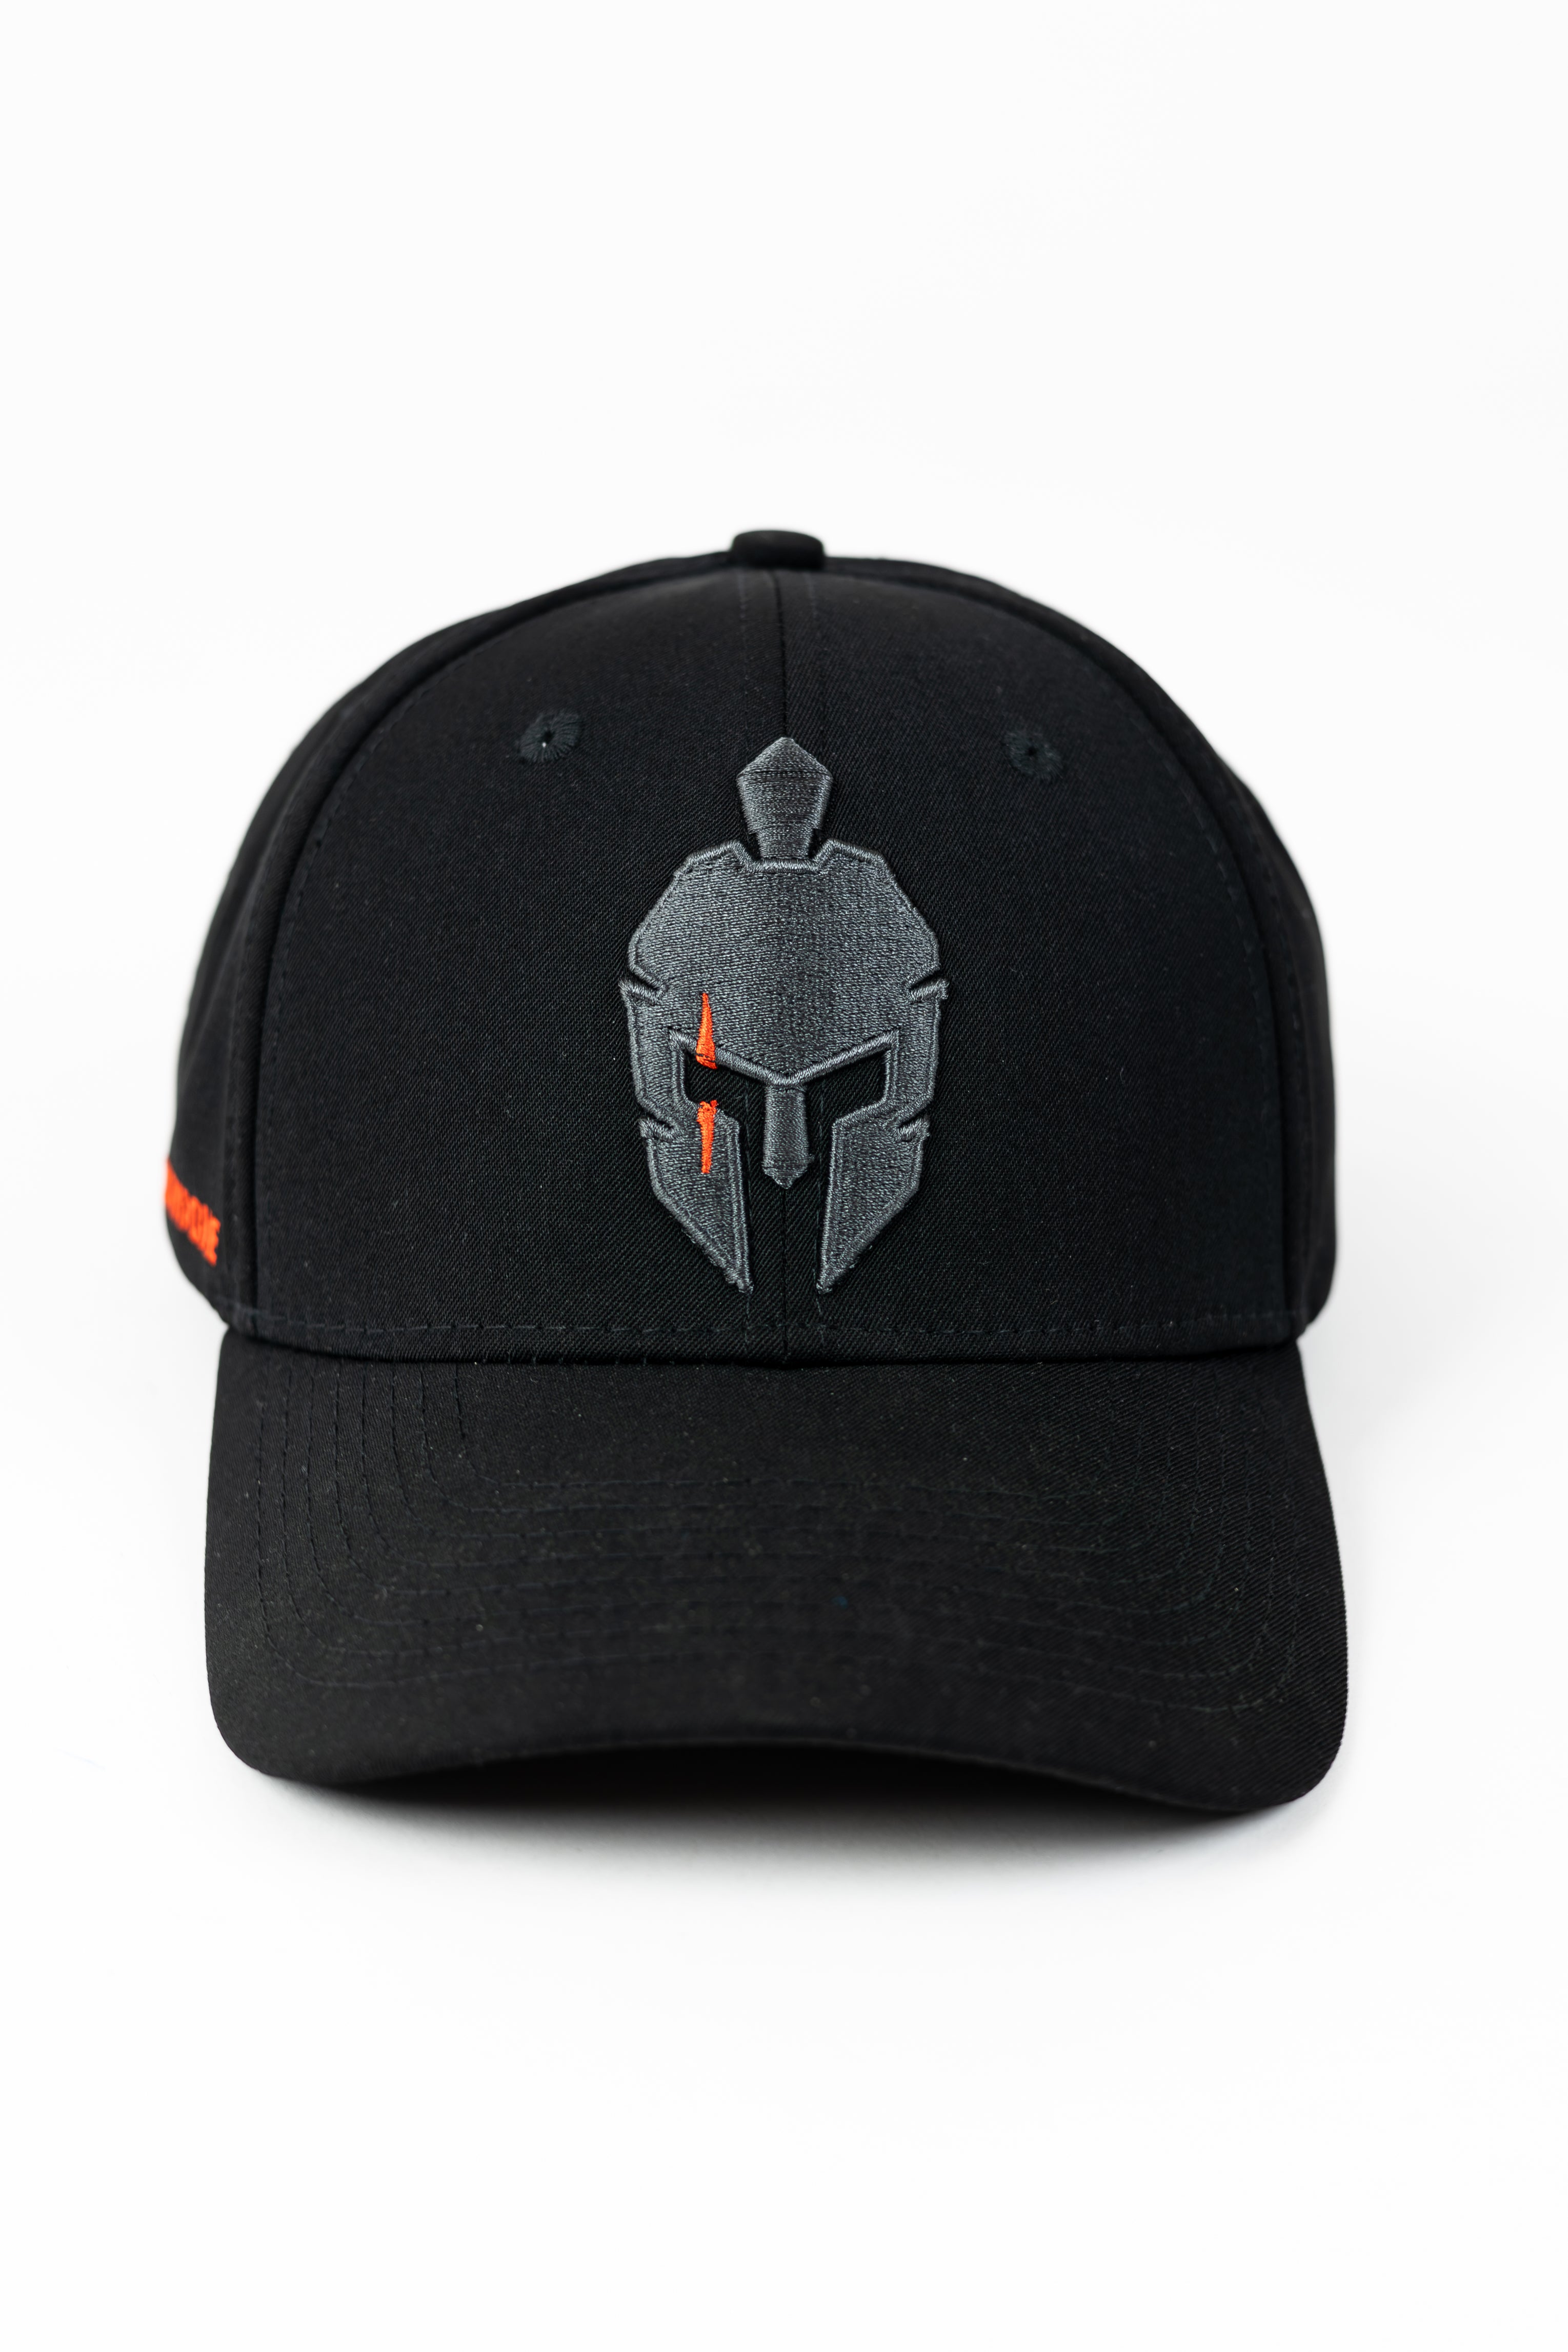 Black Strength of One baseball cap with a gray and orange spartan helmet emblem.